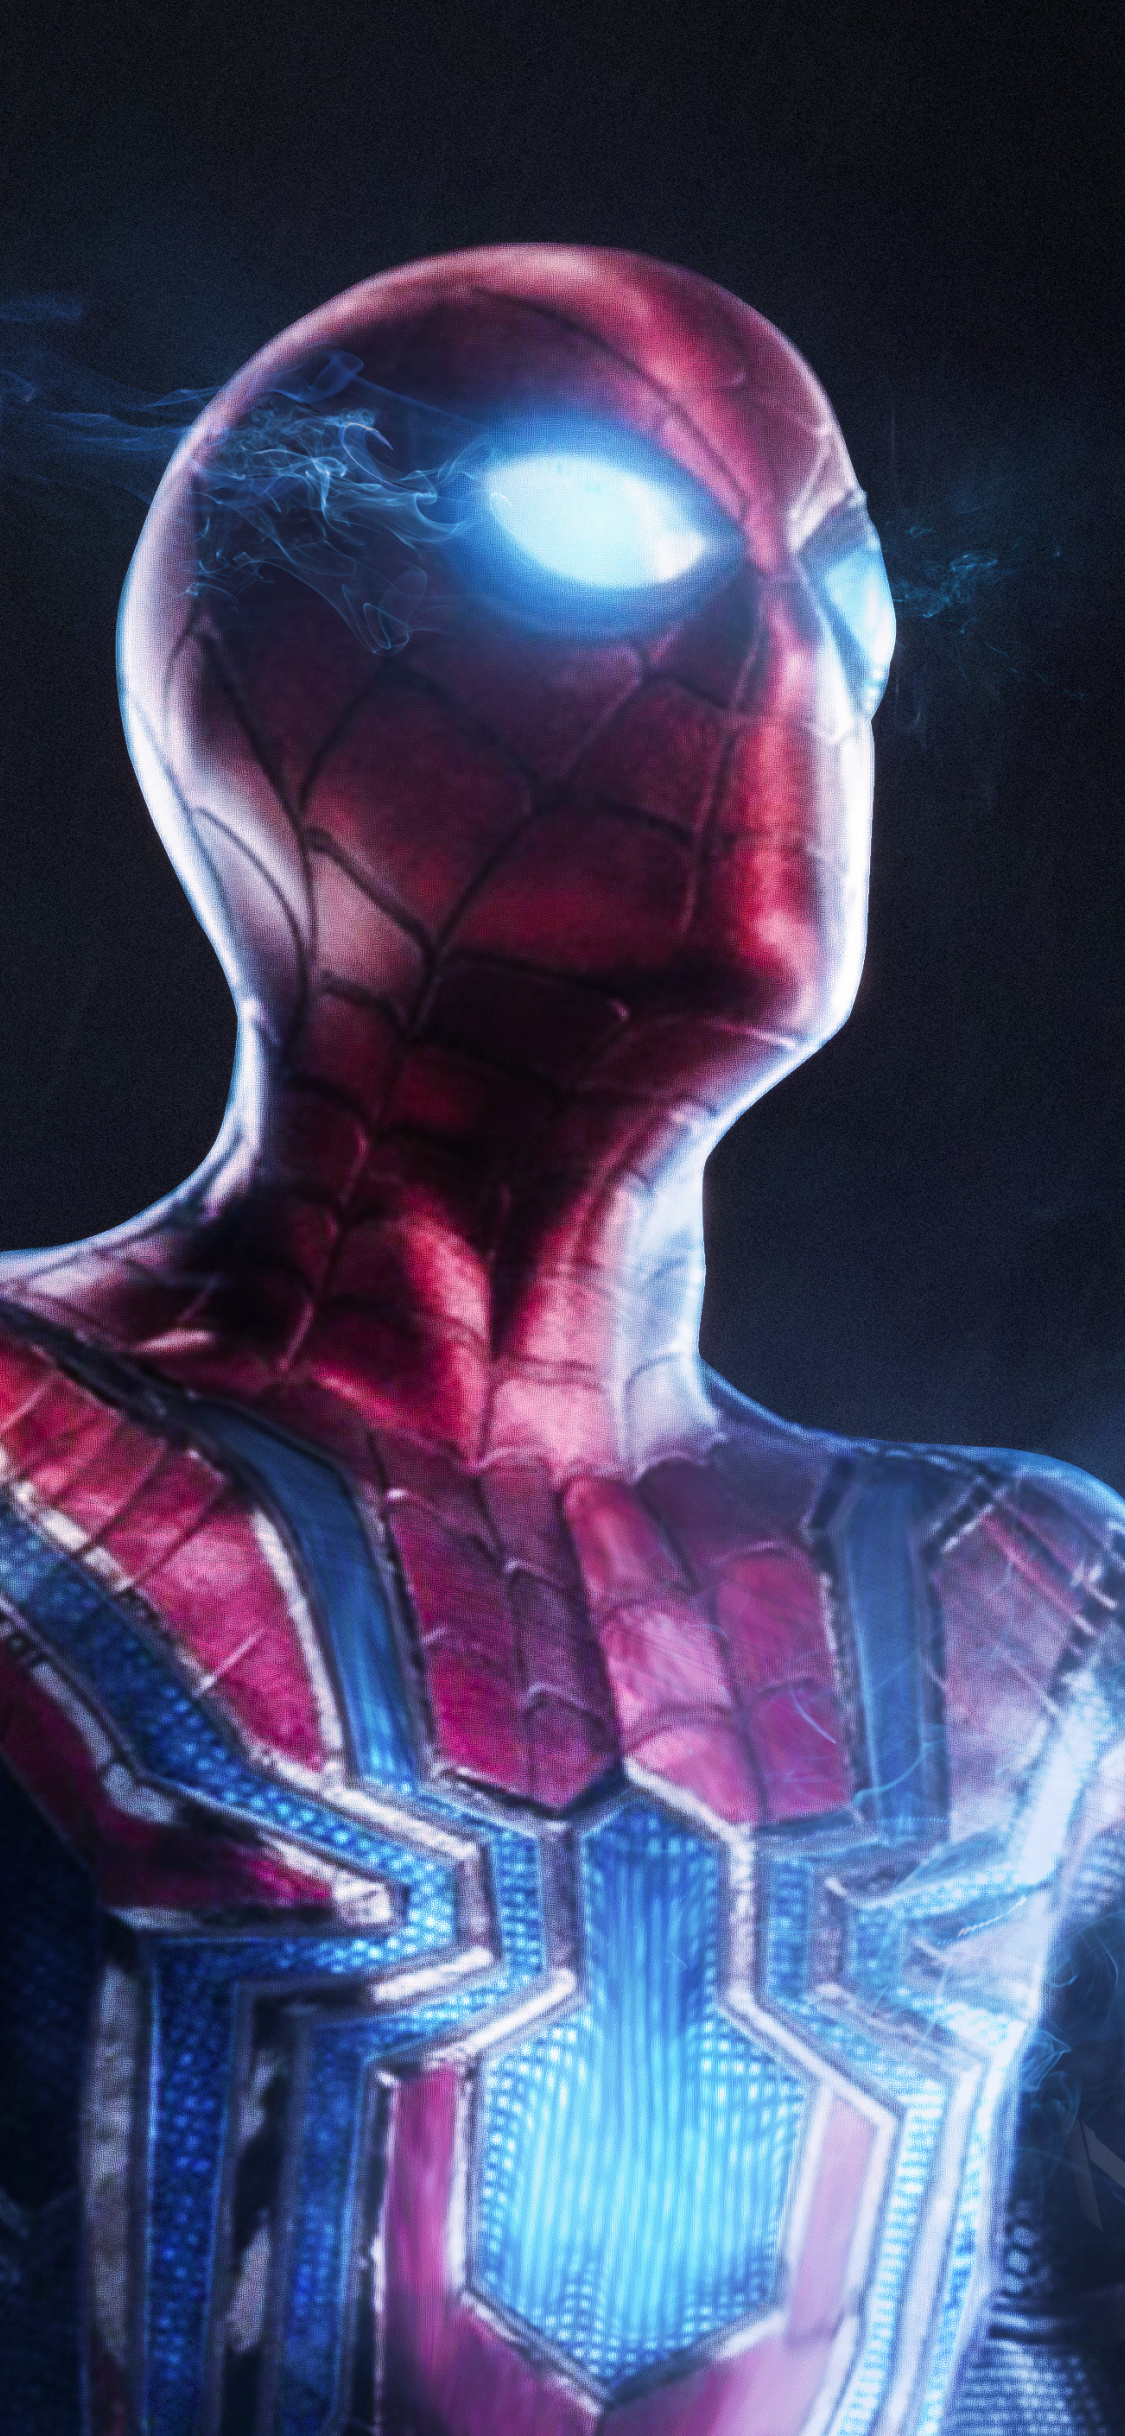 Download 1125x2436 Wallpaper Spider Man, Iron Suit, Art, Movie, Iphone X 1125x2436 HD Image, Background, 9148